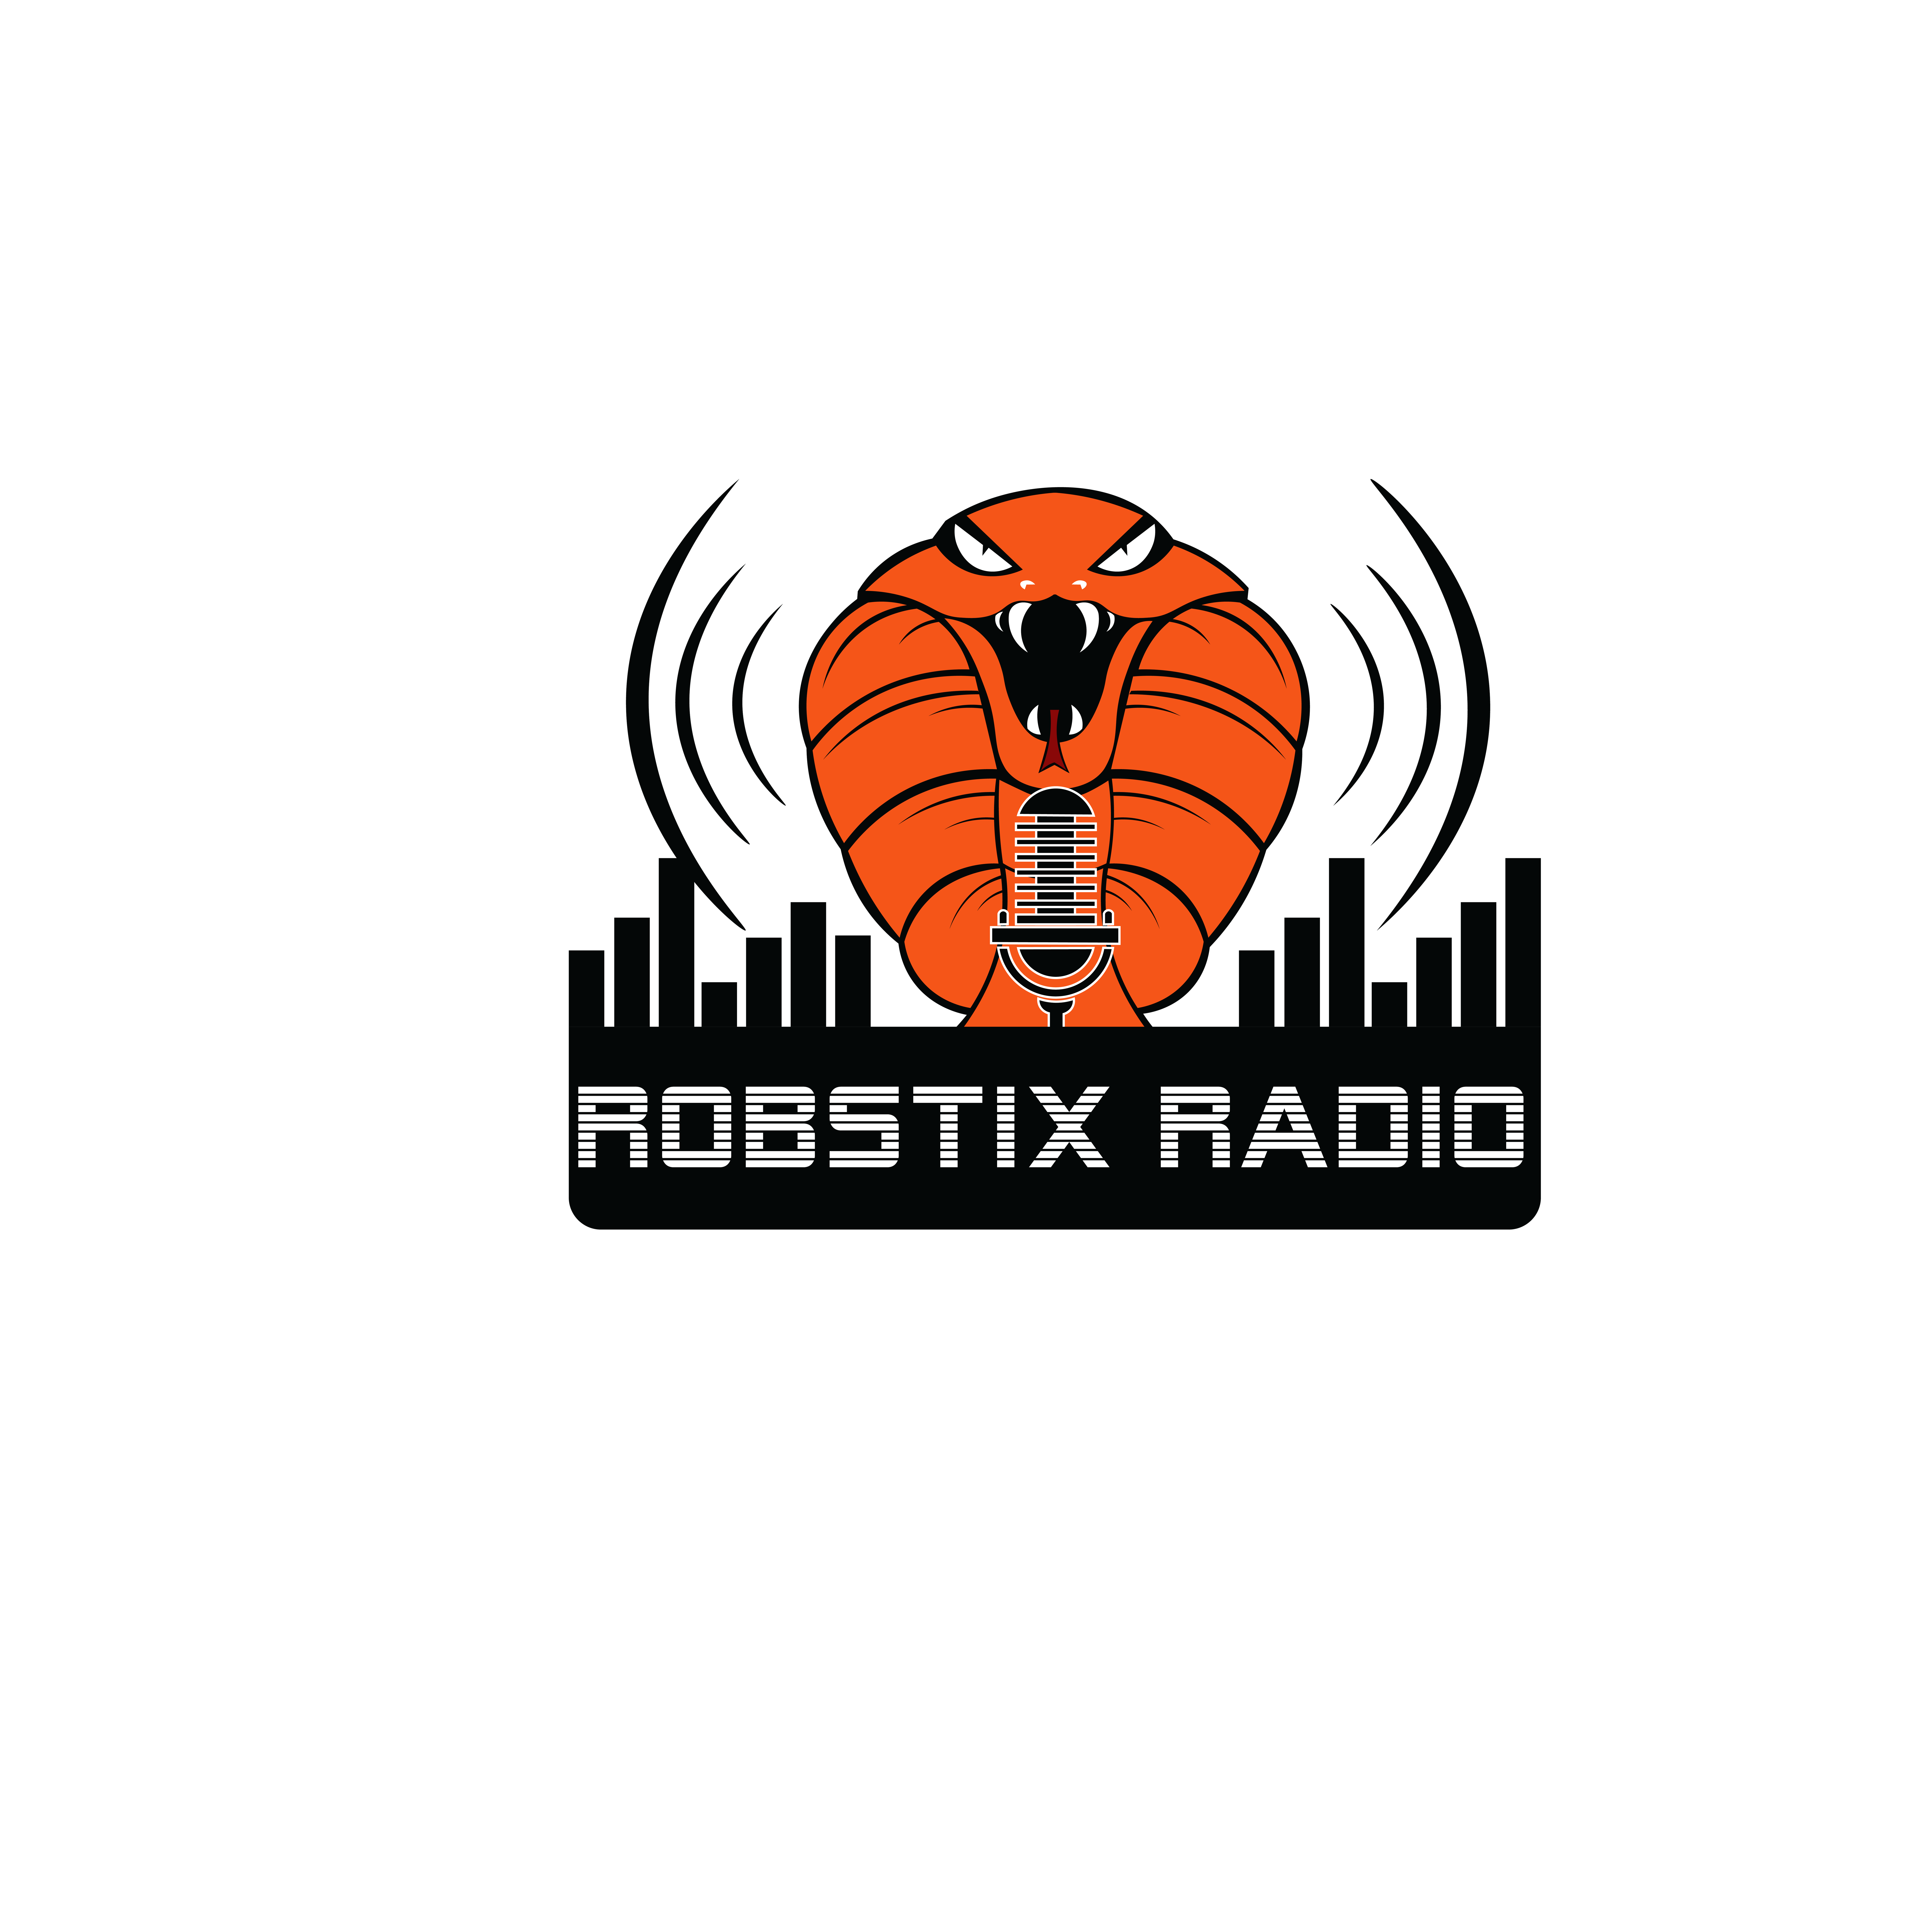 DJ Robstix Radio